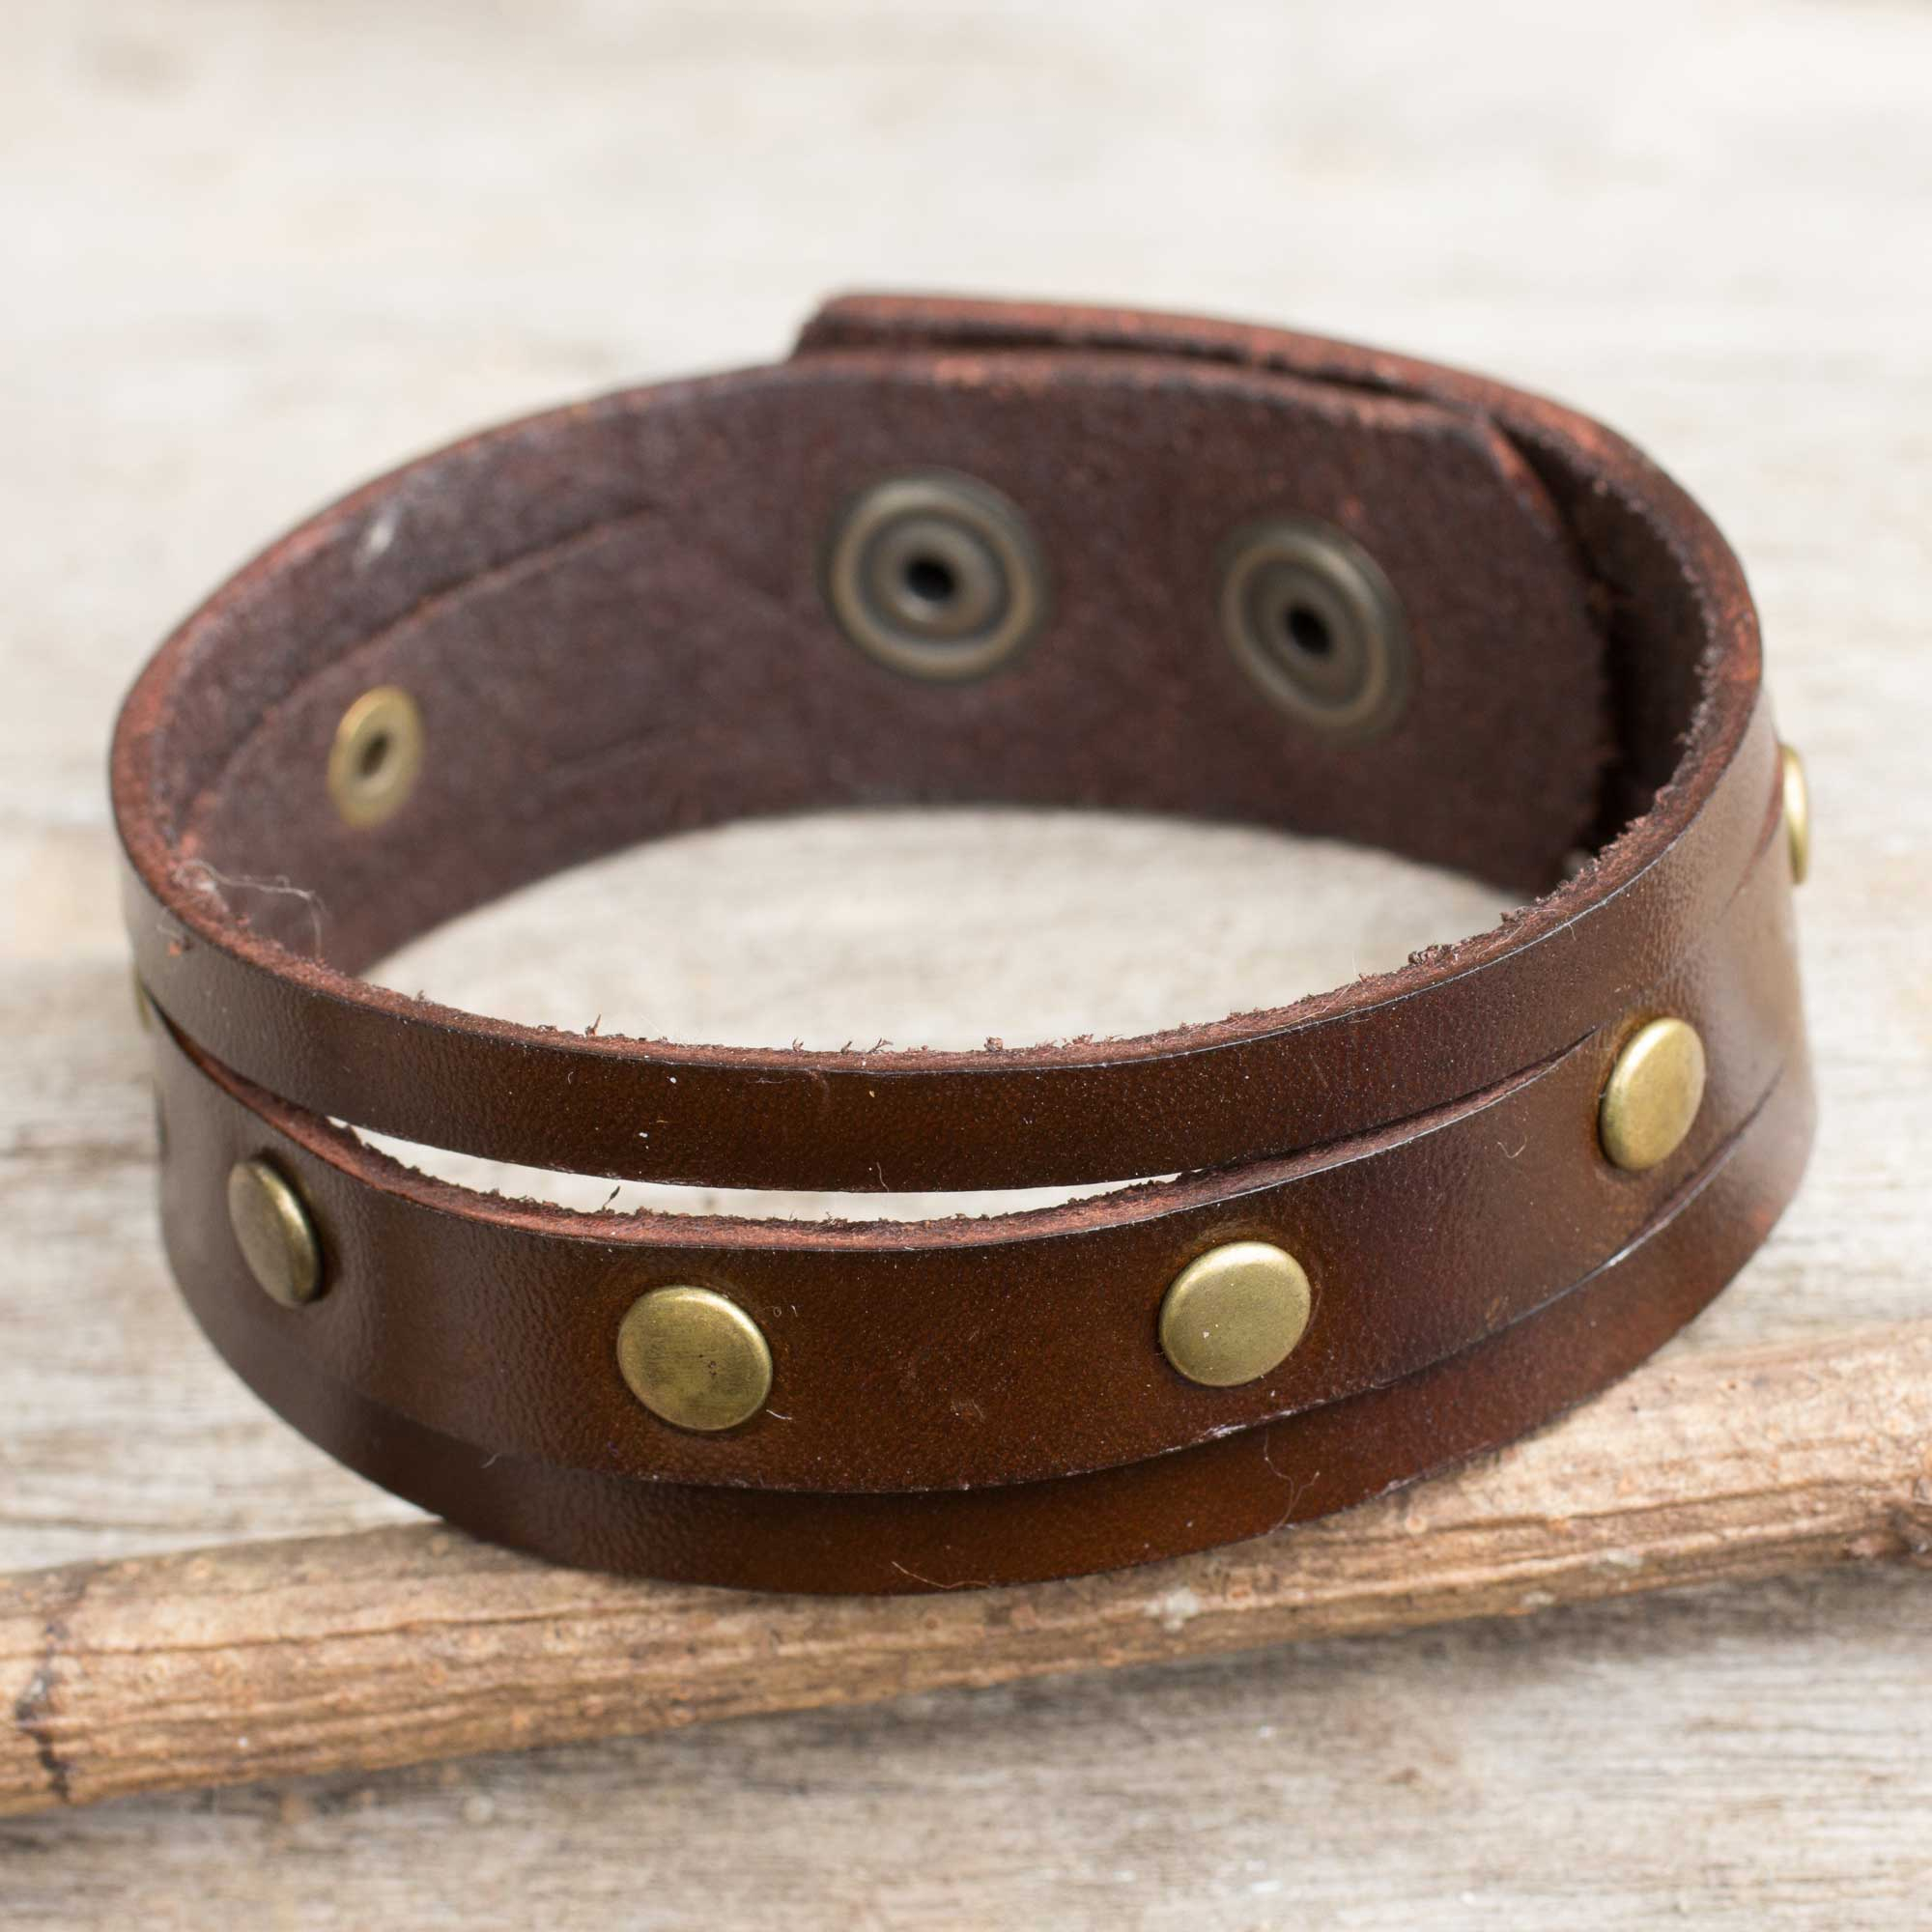 Men's Braided Leather Wristband Bracelet from Bali - Bedeg Style | NOVICA